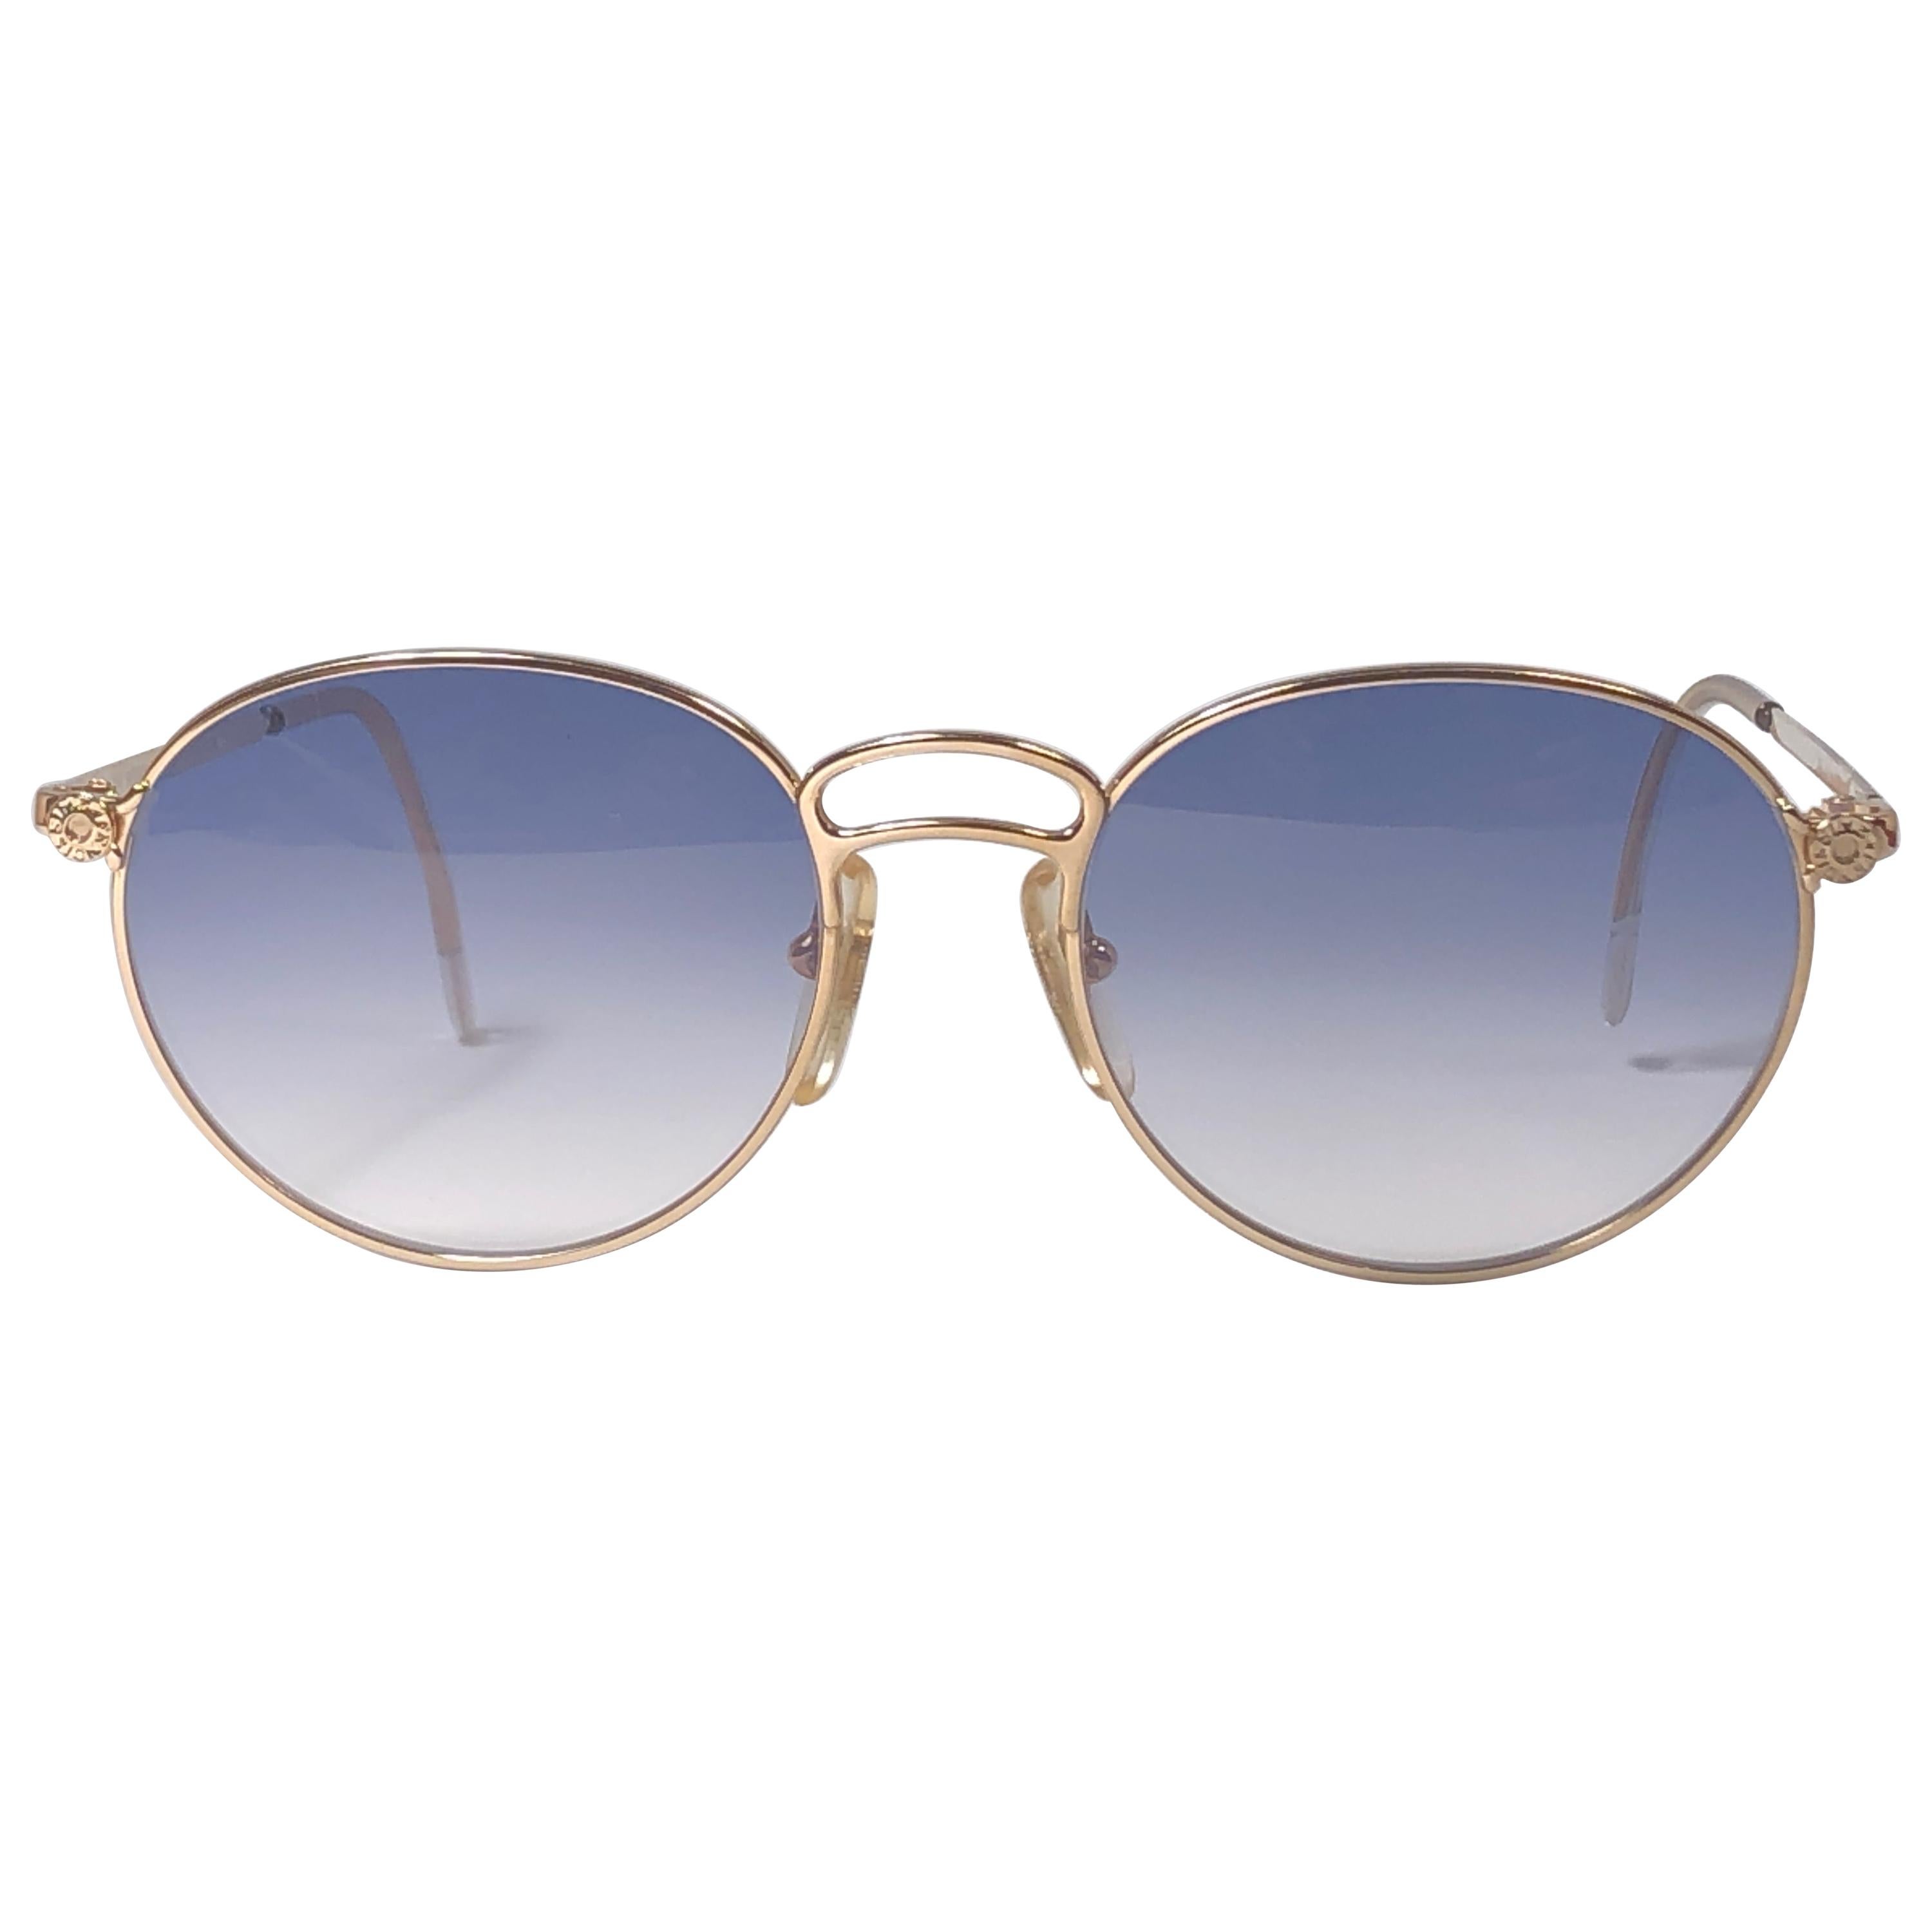 New Fendissime Gold Blue Gradient Lenses Sunglasses 1990's Italy For Sale